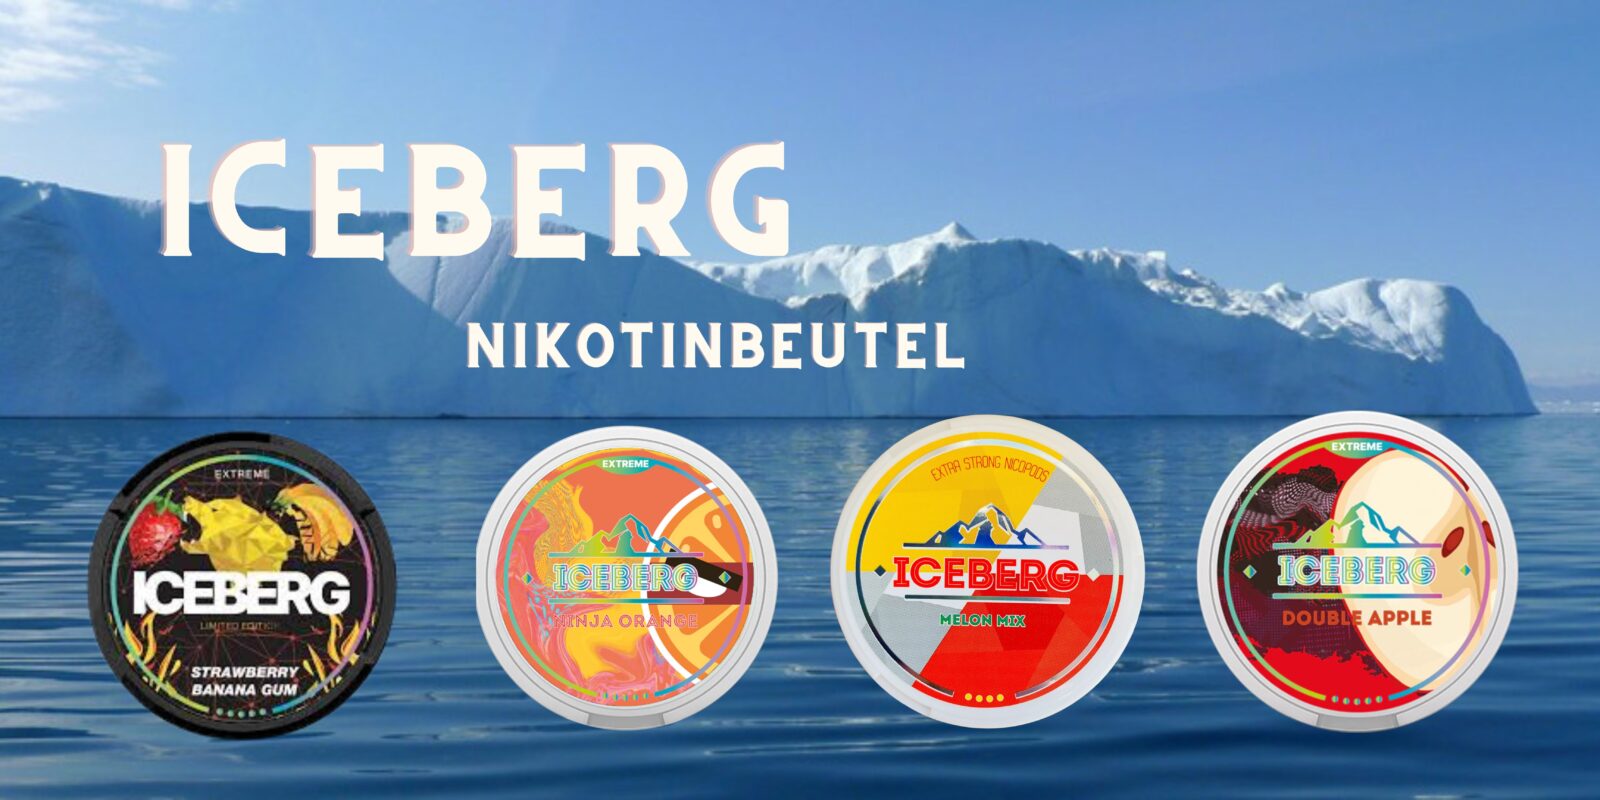 Iceberg Dragonfire SNUS/NIKOTINBEUTEL - XMANIA Deutschland 14